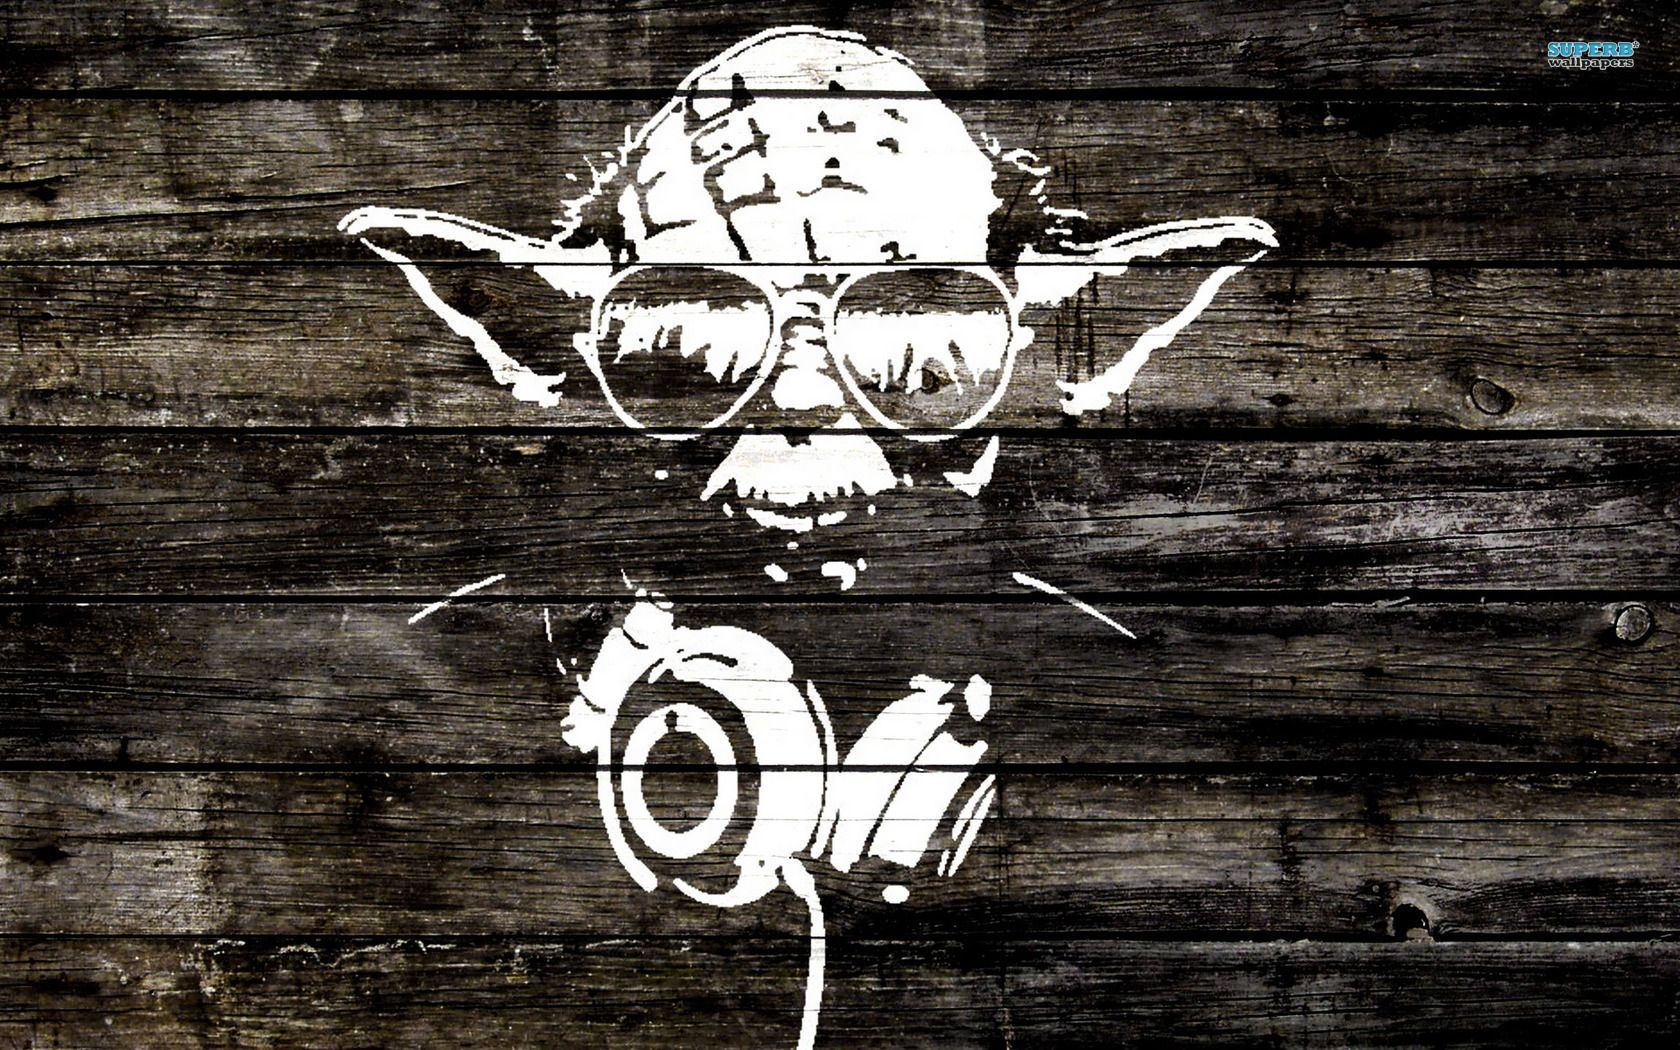 Yoda wood graffiti wallpaper - Movie wallpapers -